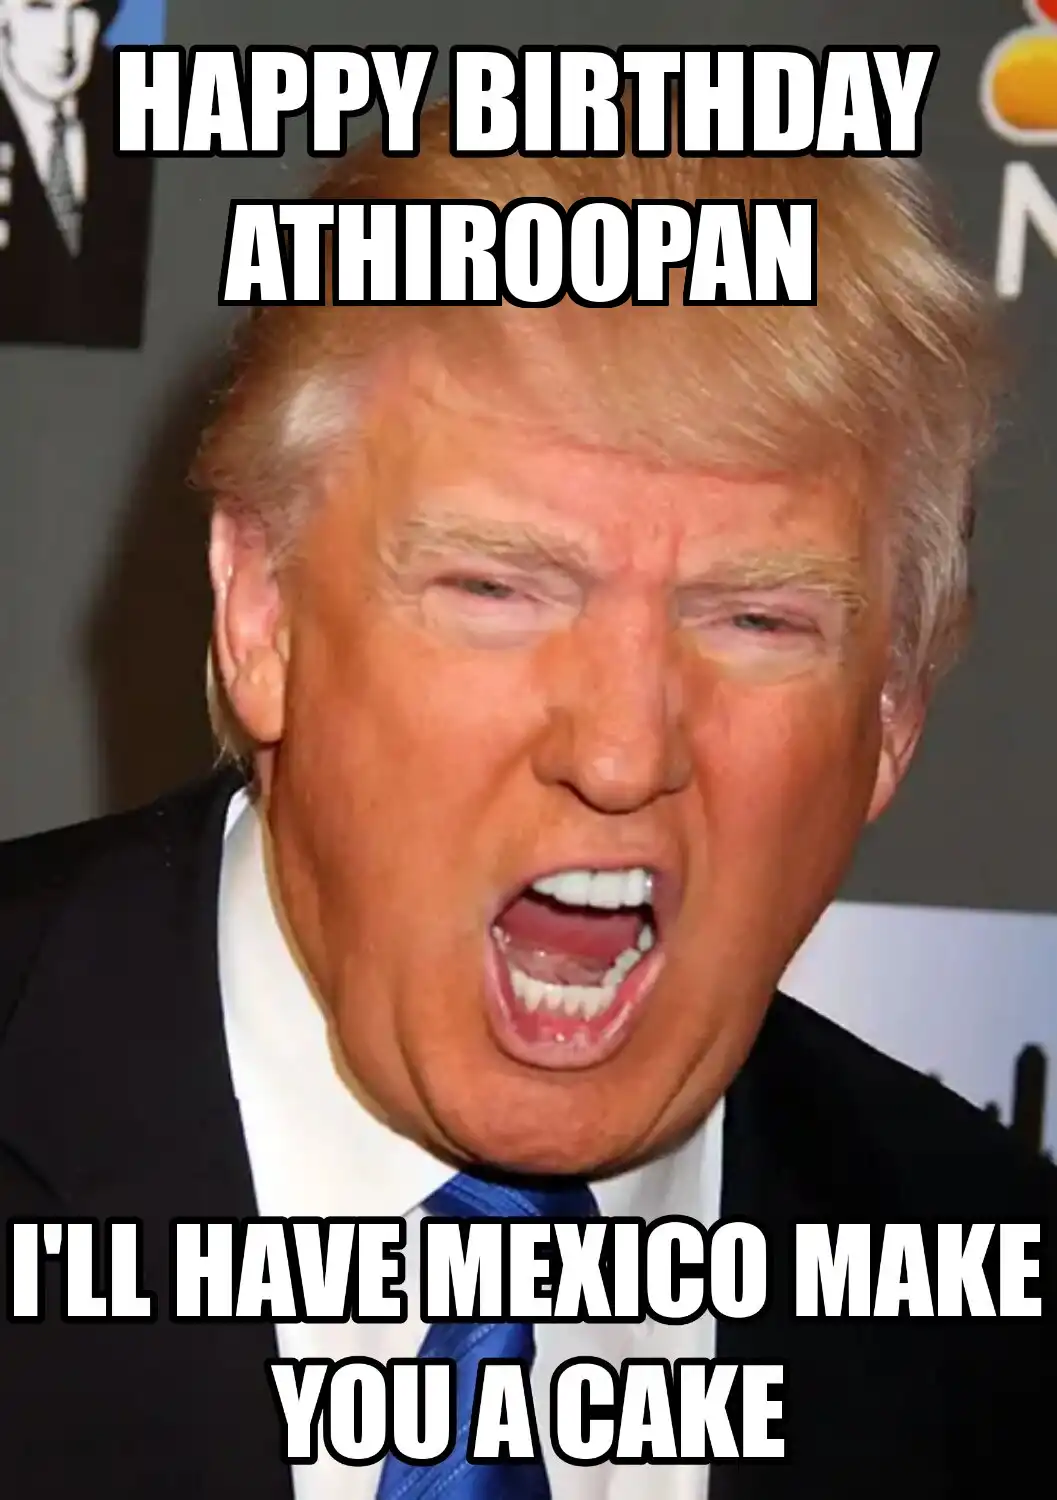 Happy Birthday Athiroopan Mexico Make You A Cake Meme